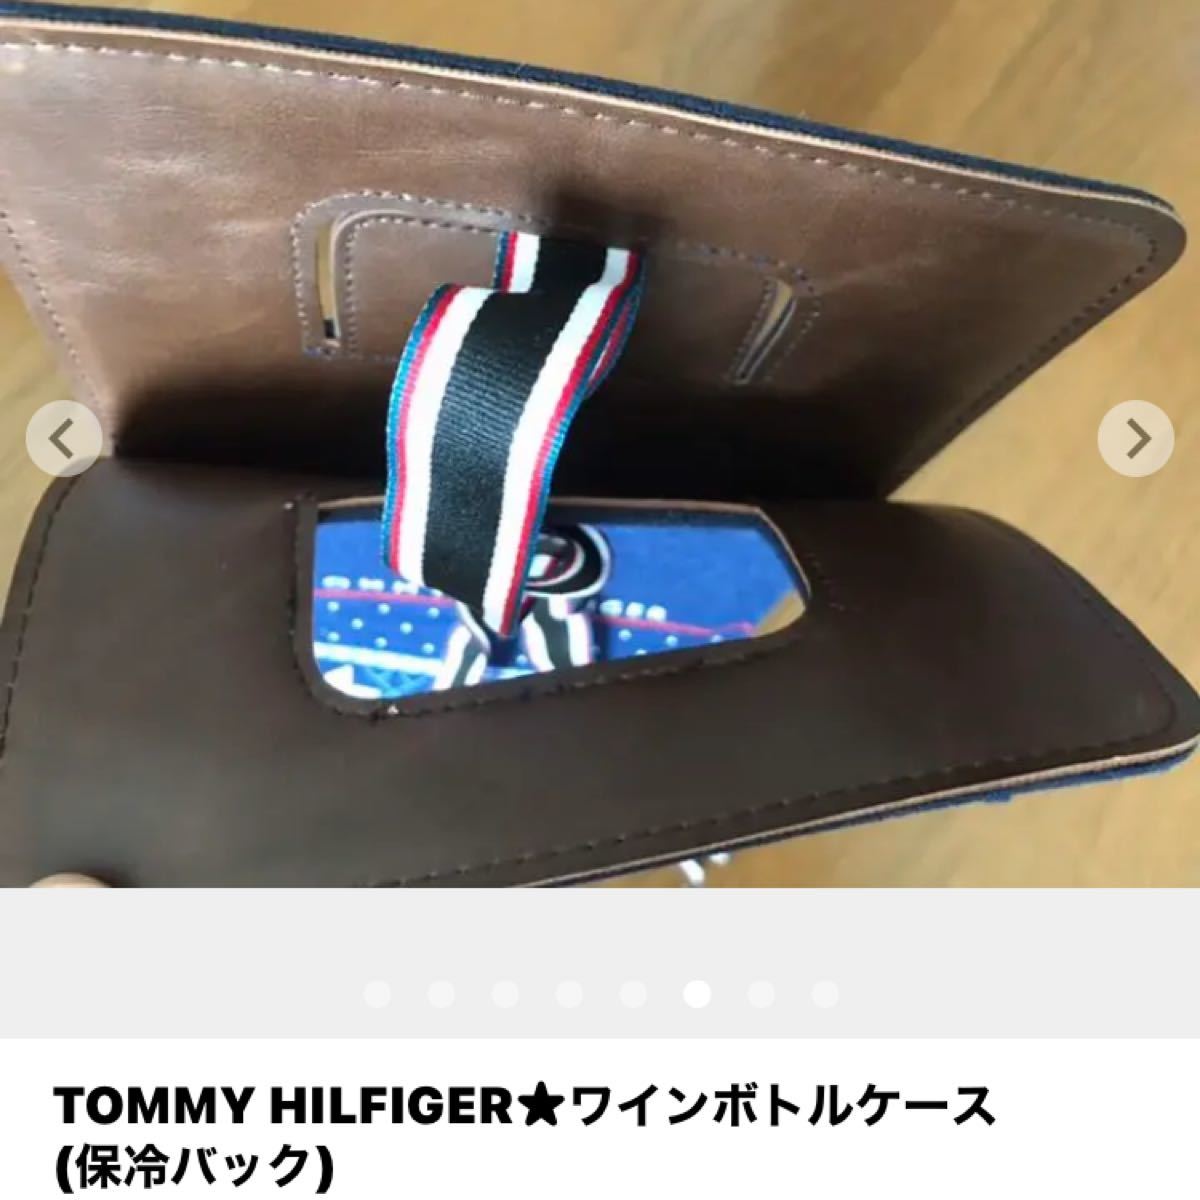 TOMMY HILFIGER★ワインボトルケース(保冷バック)